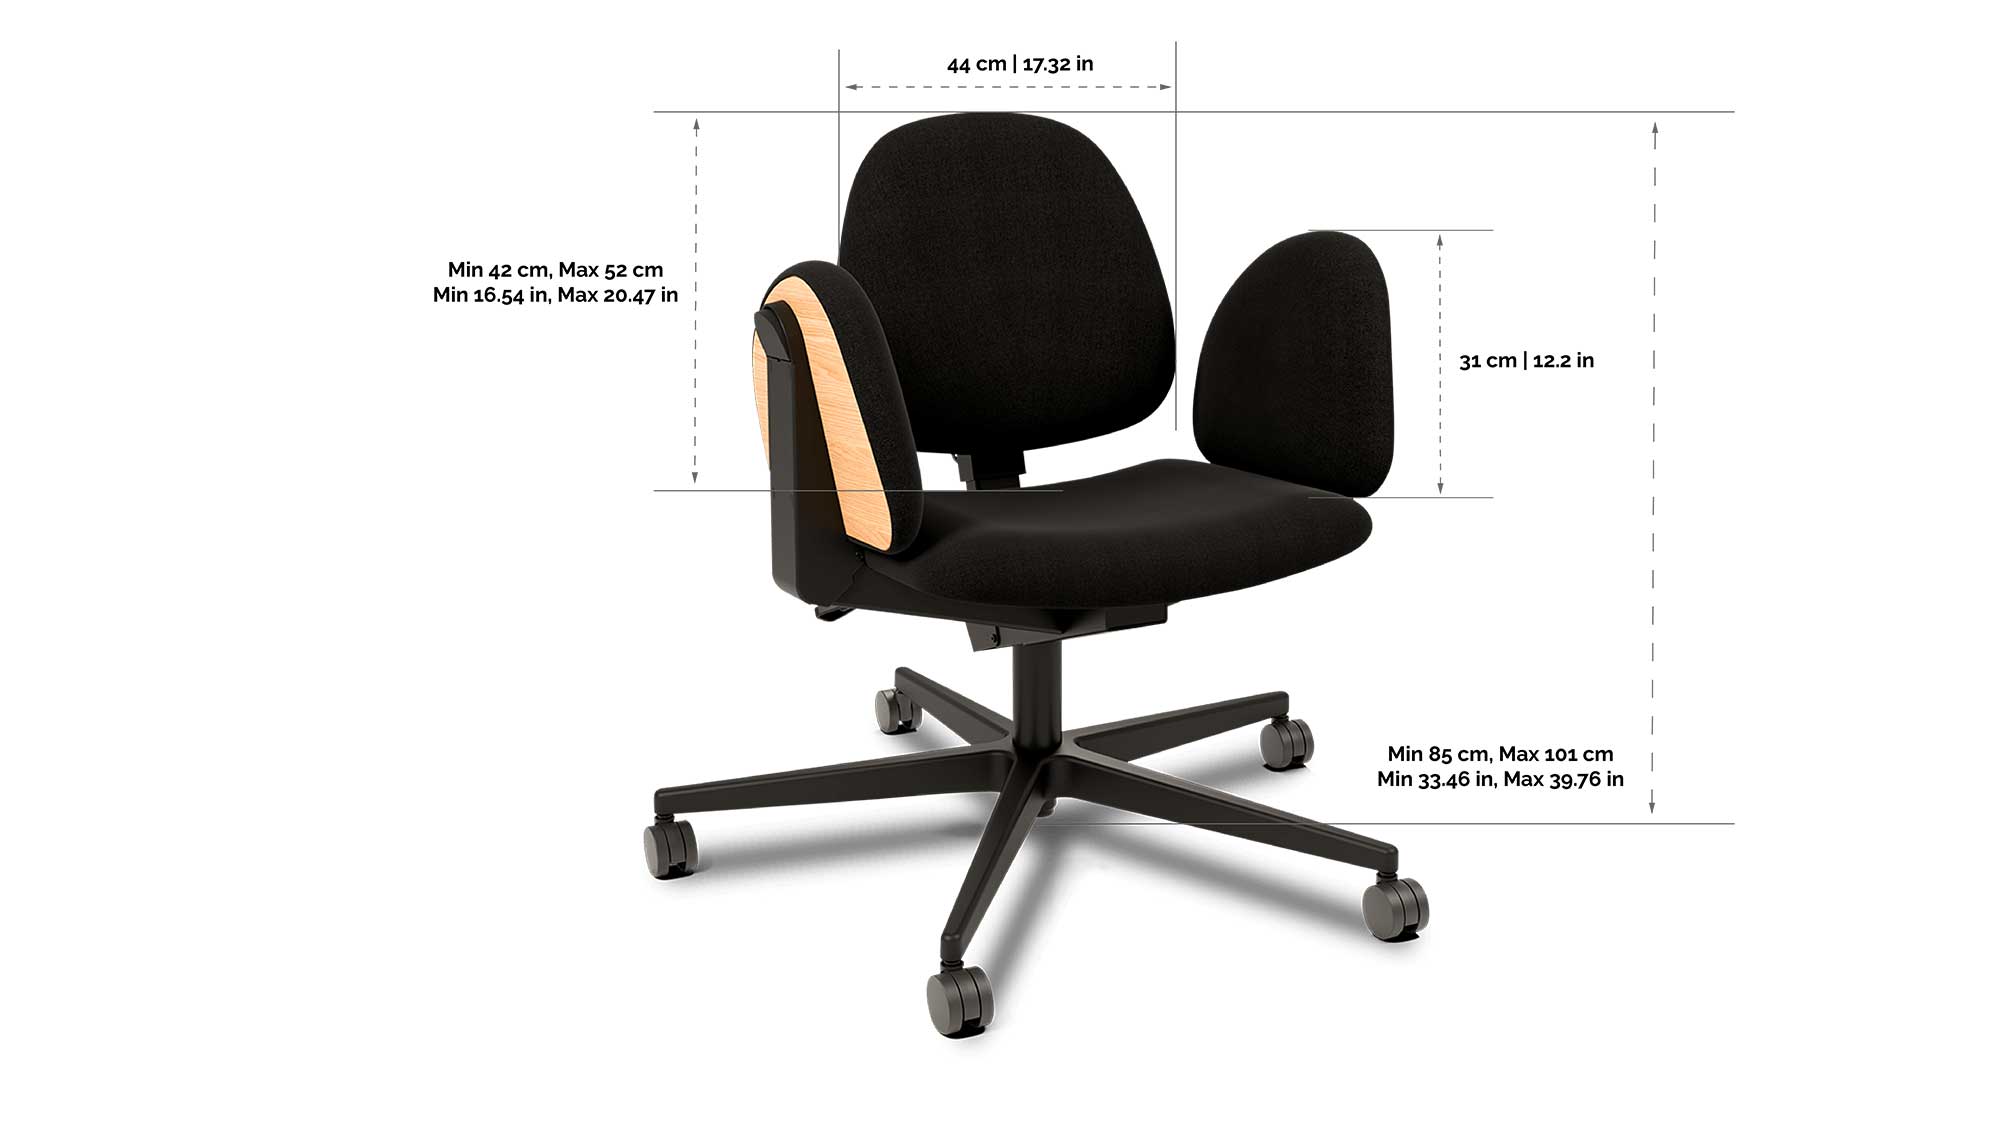 Chair_Dimensions-3d-rendered-3.jpg